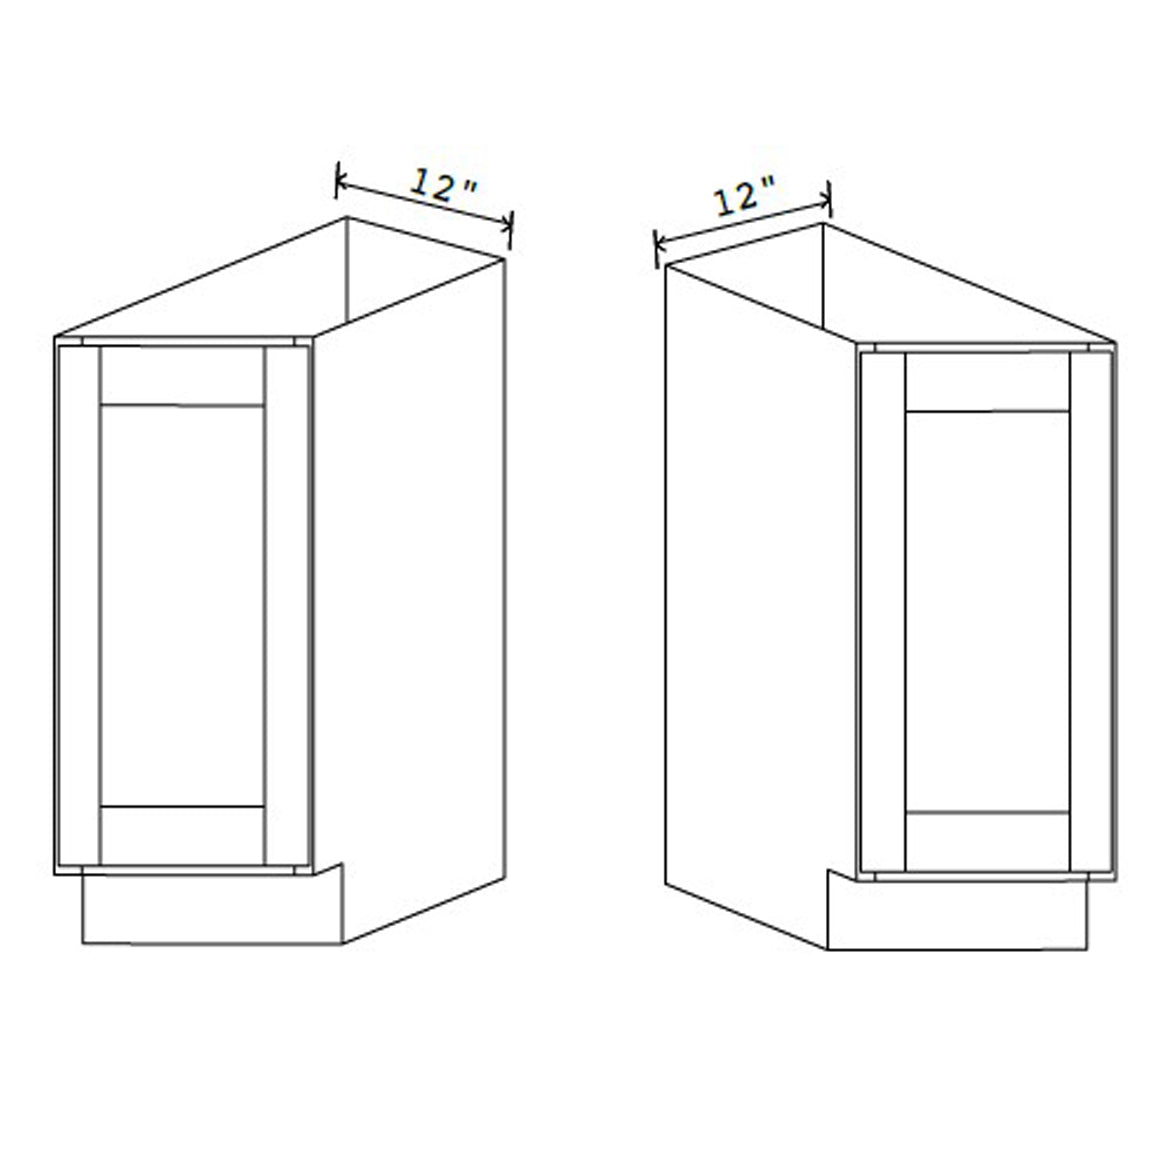 Angle Base Cabinet - 12W x 34-1/2H x 24D - 2D RIGHT - Aspen White